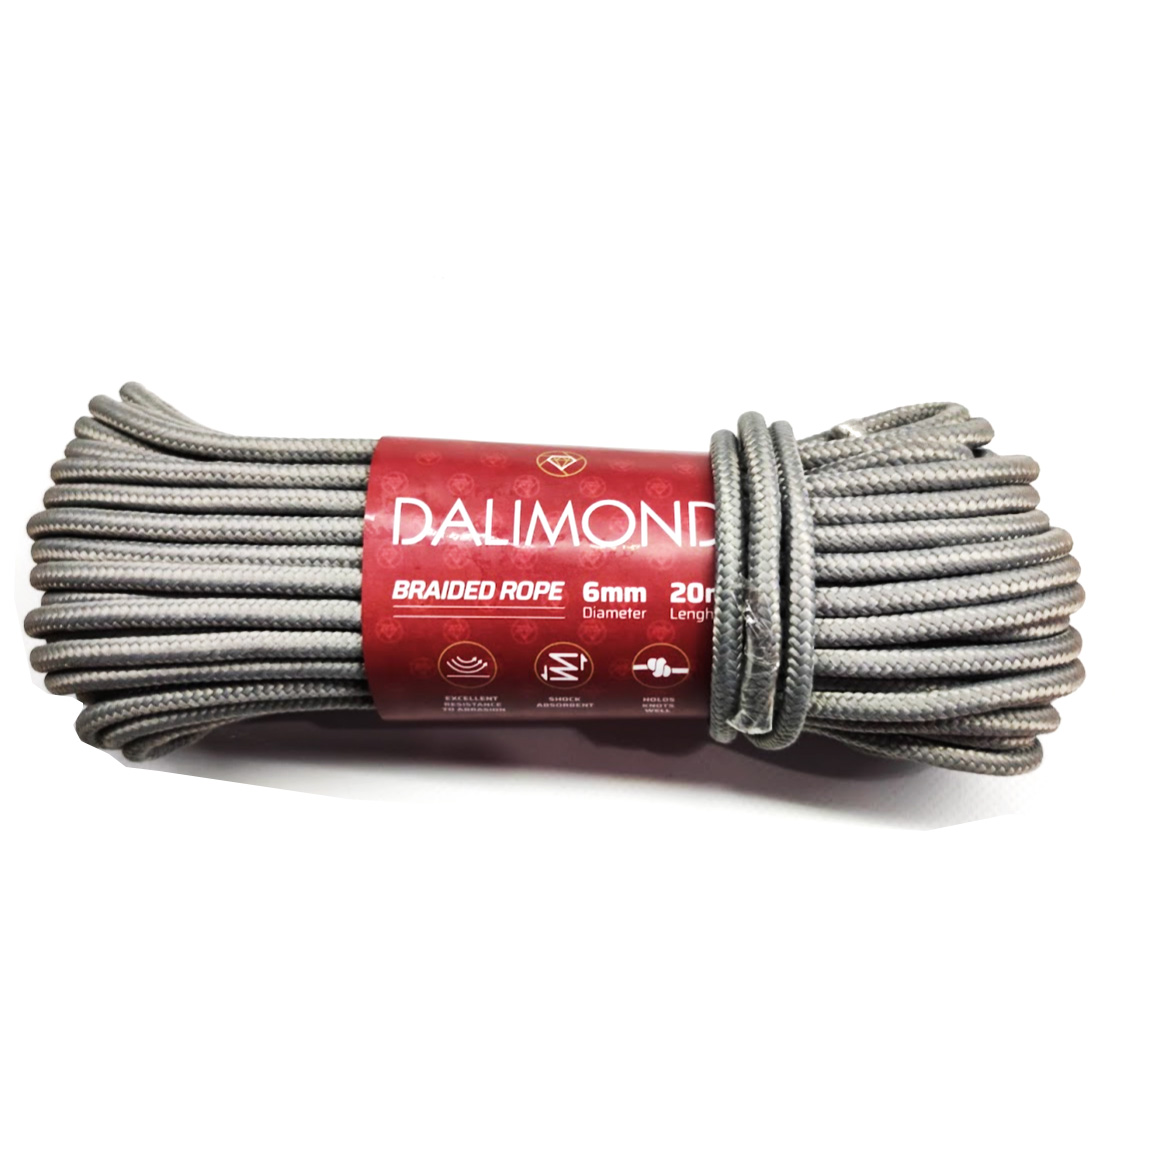 dalimond rope gkri 6 20